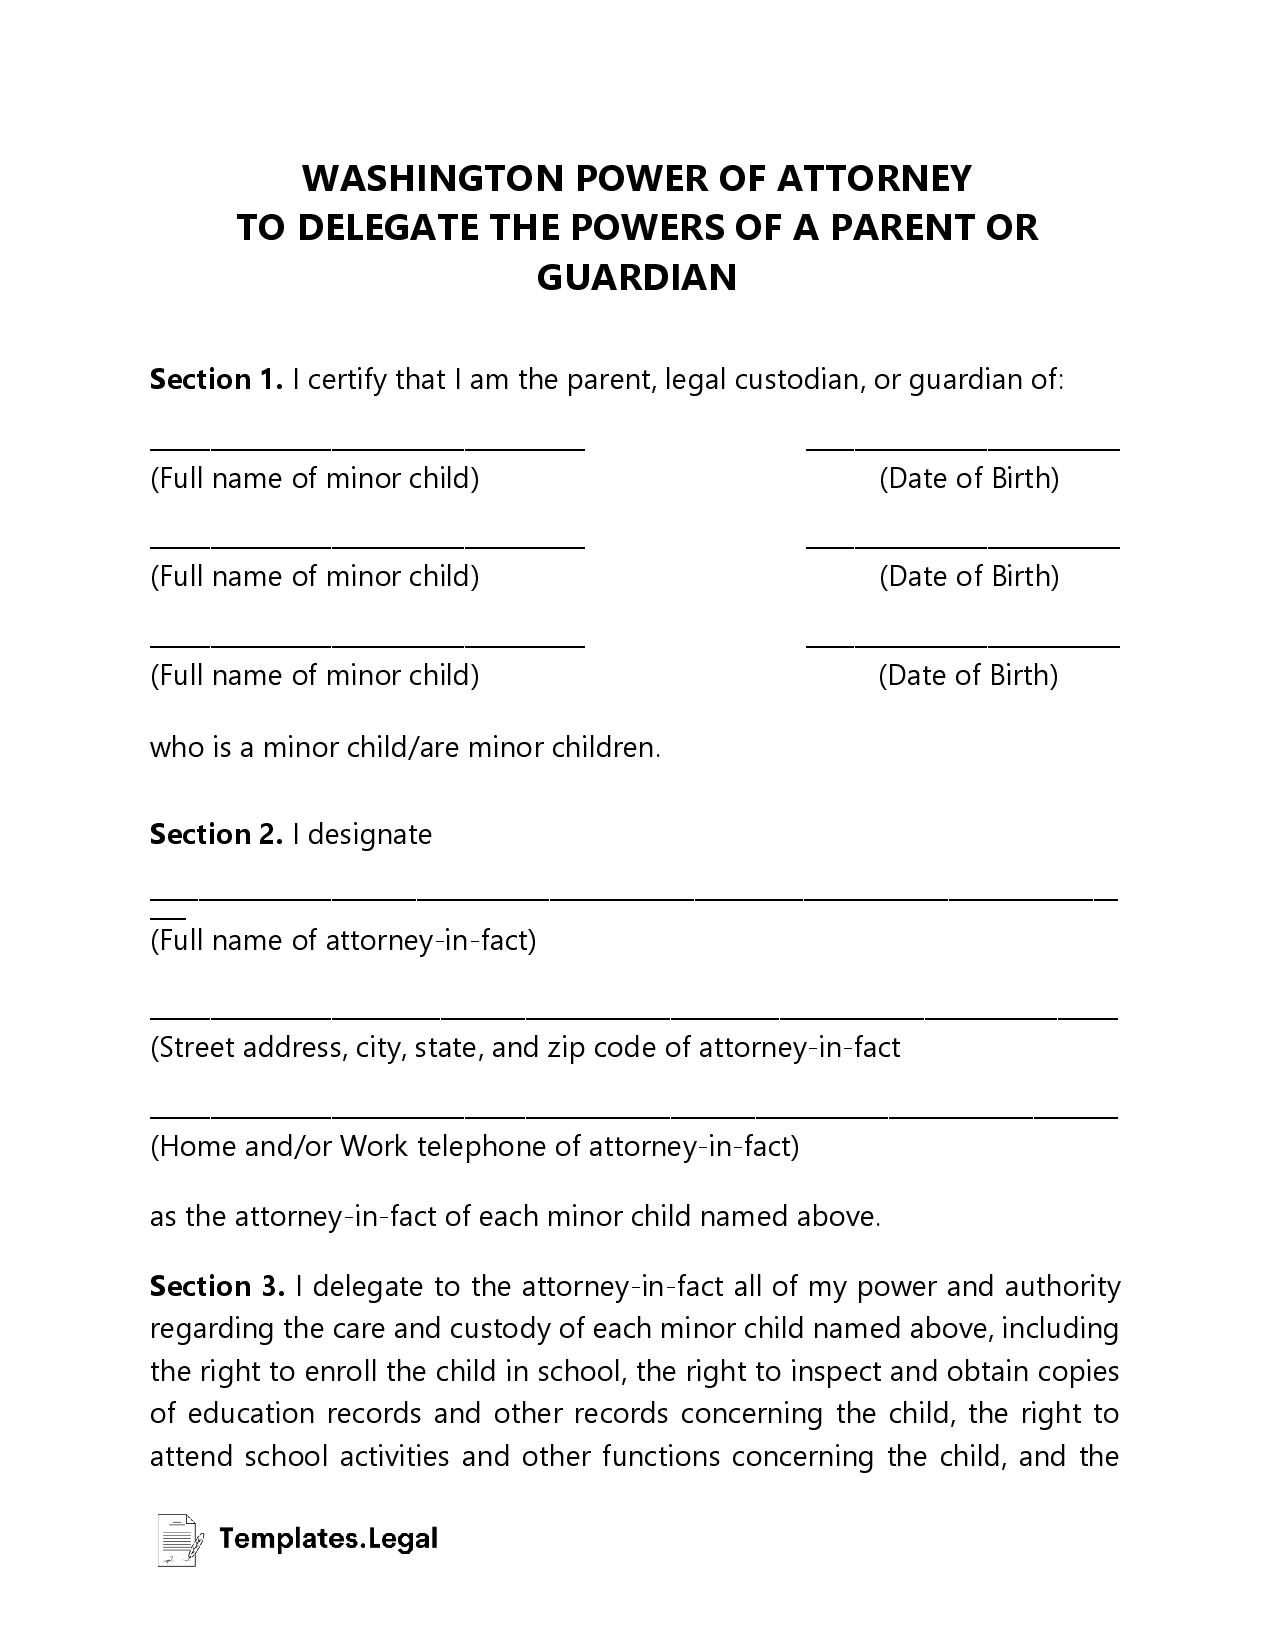 Washington Minor (Child) Power of Attorney - Templates.Legal